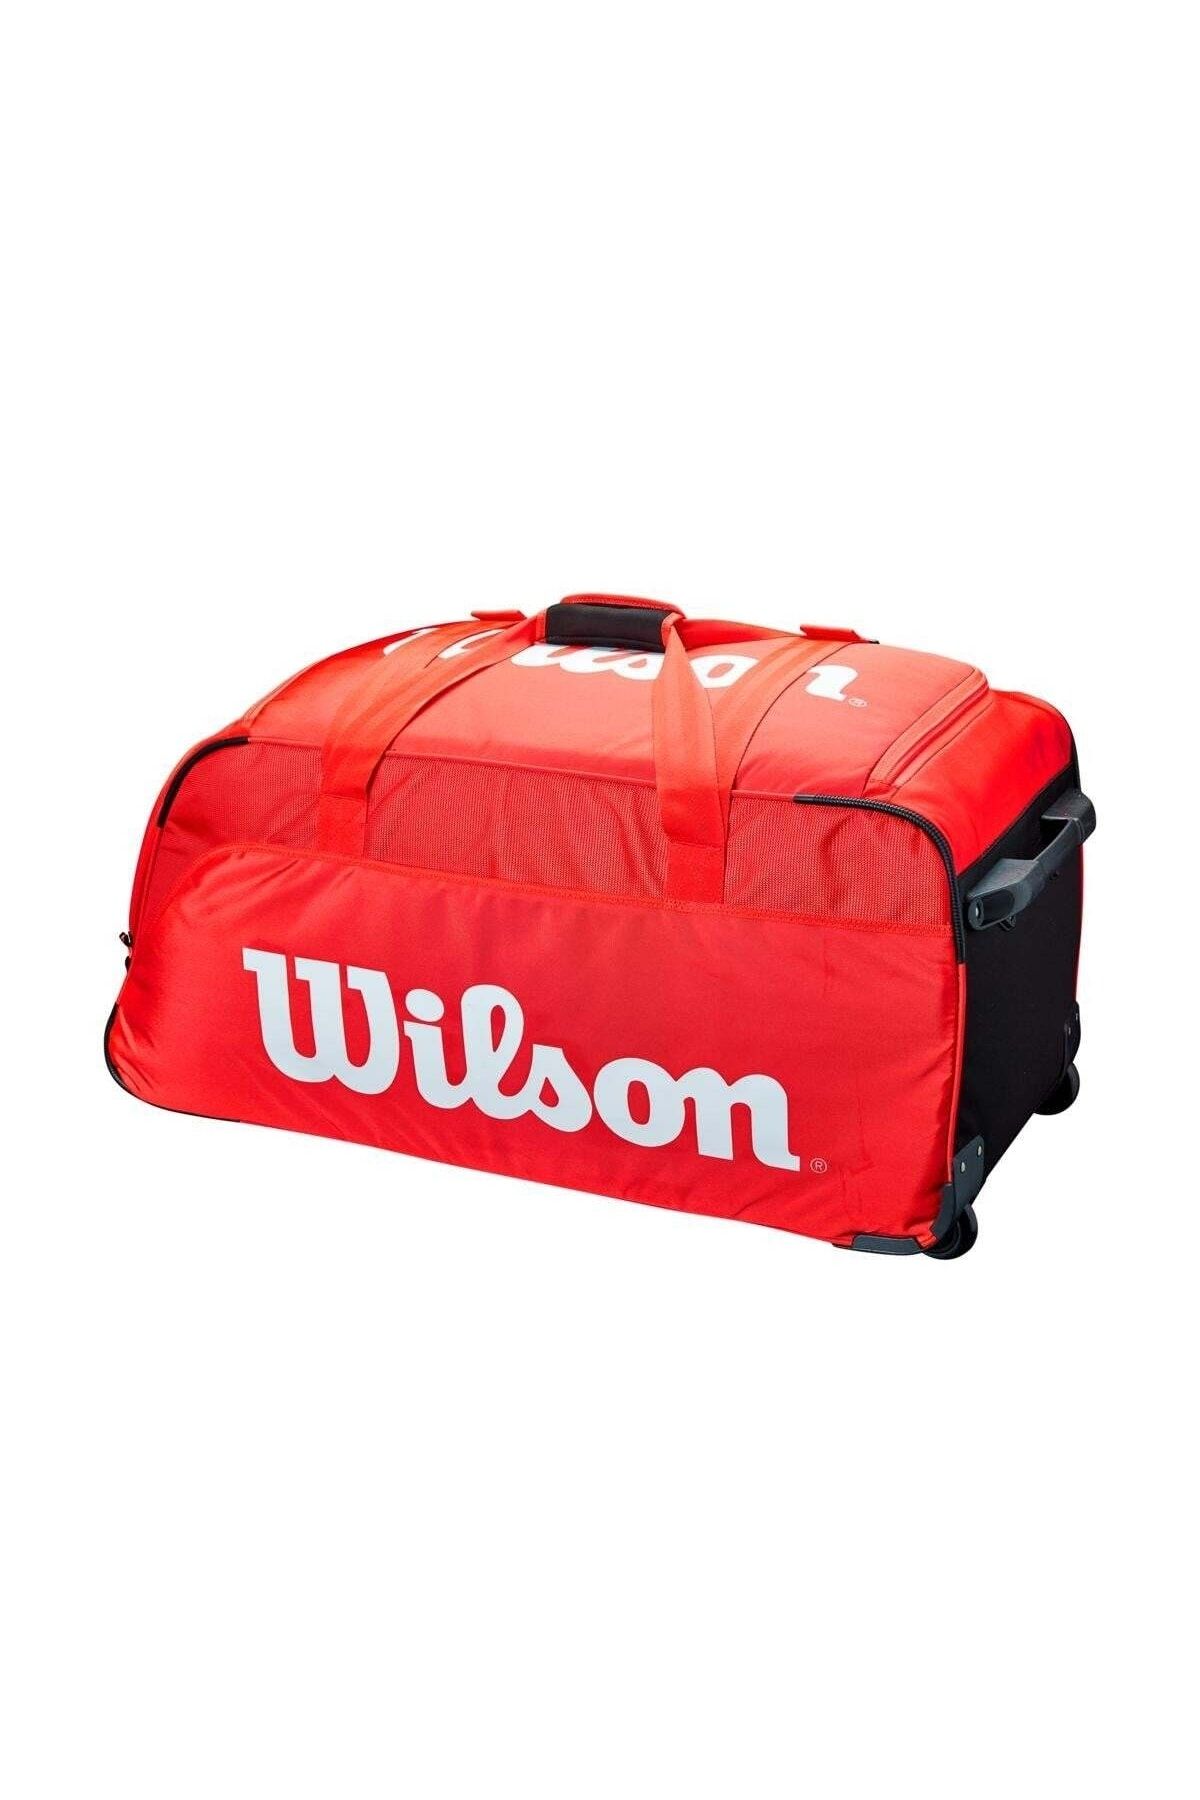 Wilson Super Tour Travel Bag